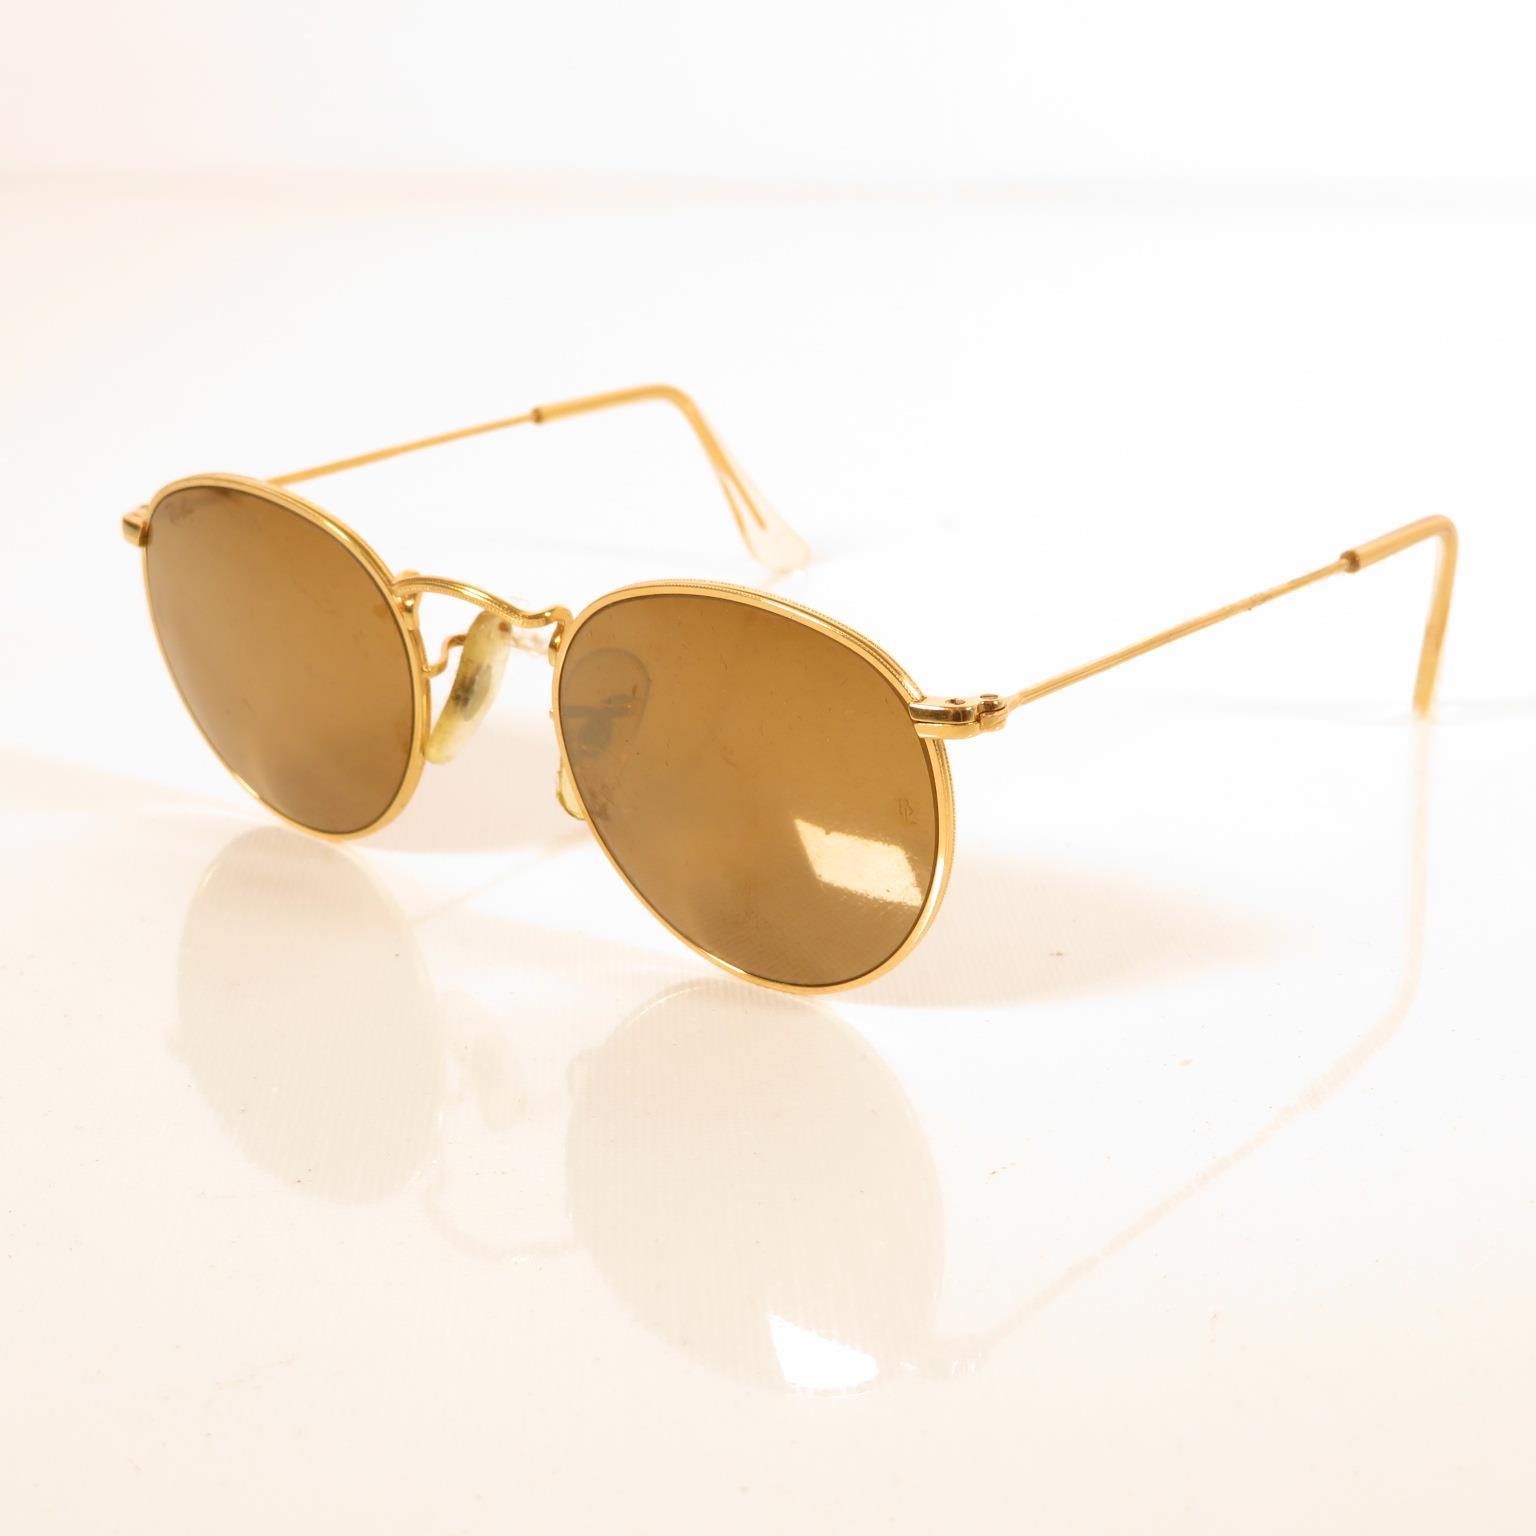 4x pairs Ray Ban sunglasses - - Image 21 of 22